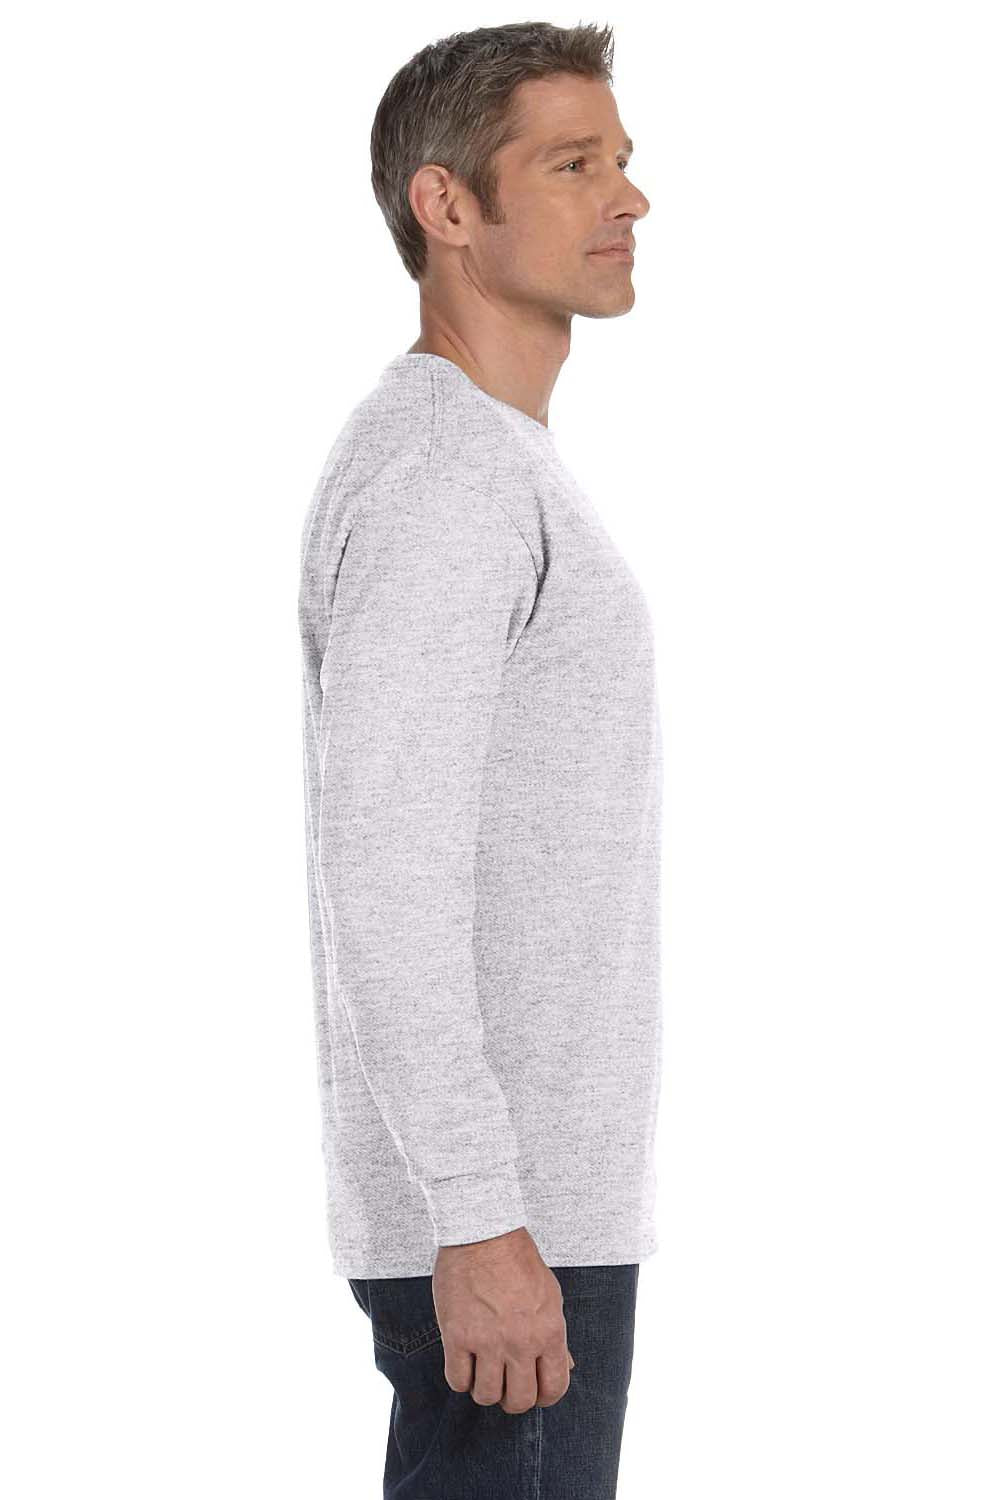 Jerzees 29L Mens Dri-Power Moisture Wicking Long Sleeve Crewneck T-Shirt Ash Grey Side